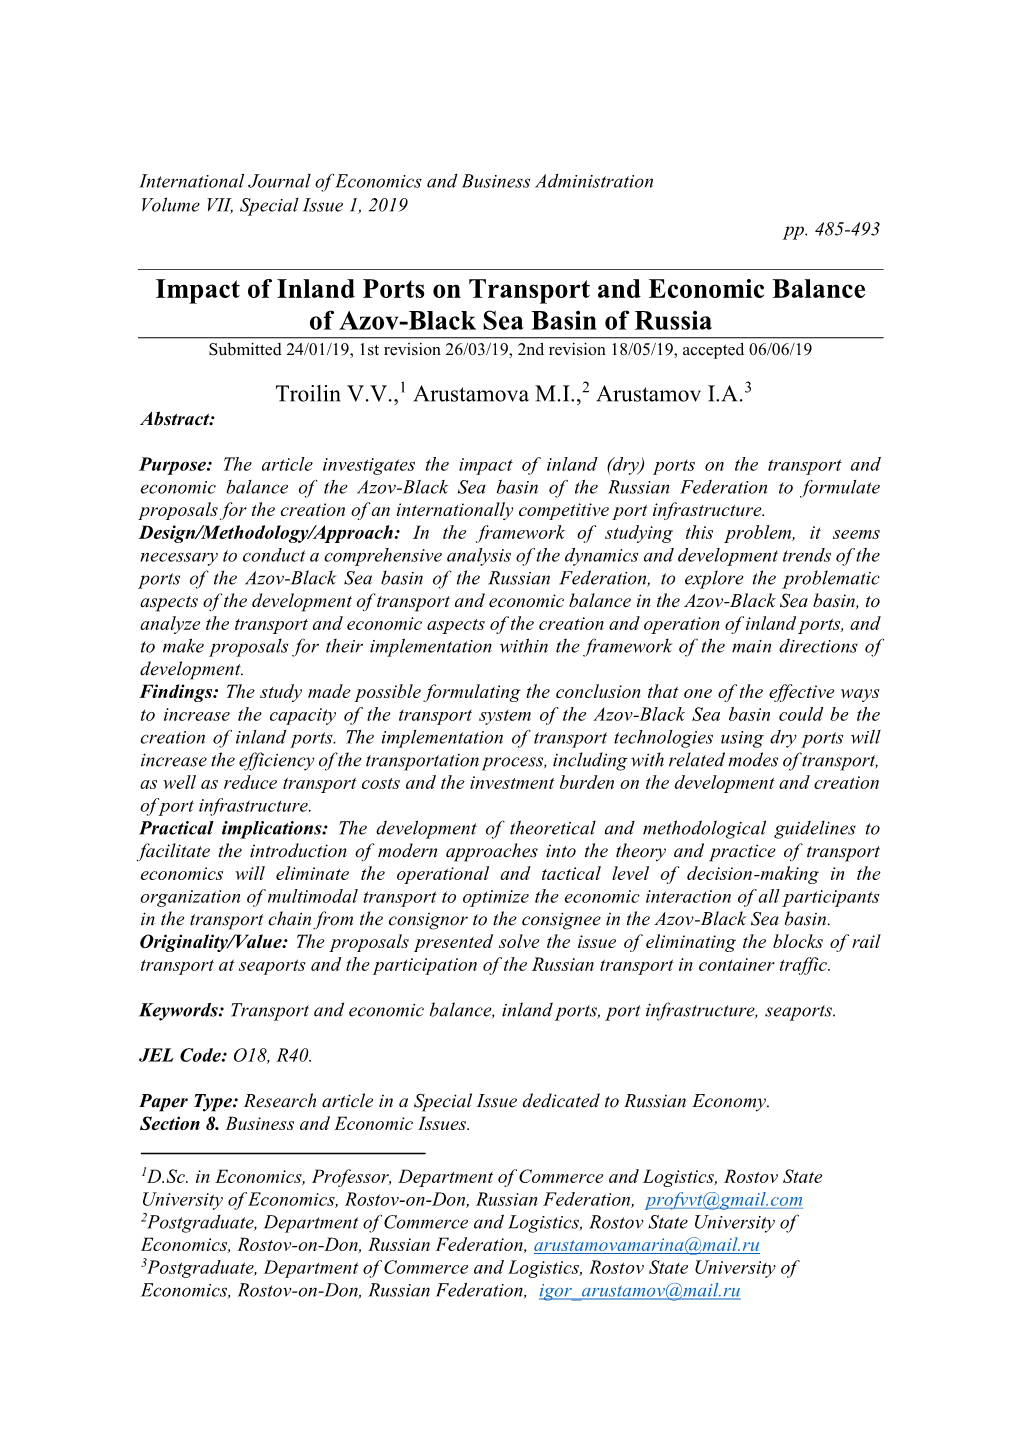 Impact of Inland Ports on Transport and Economic Balance of Azov